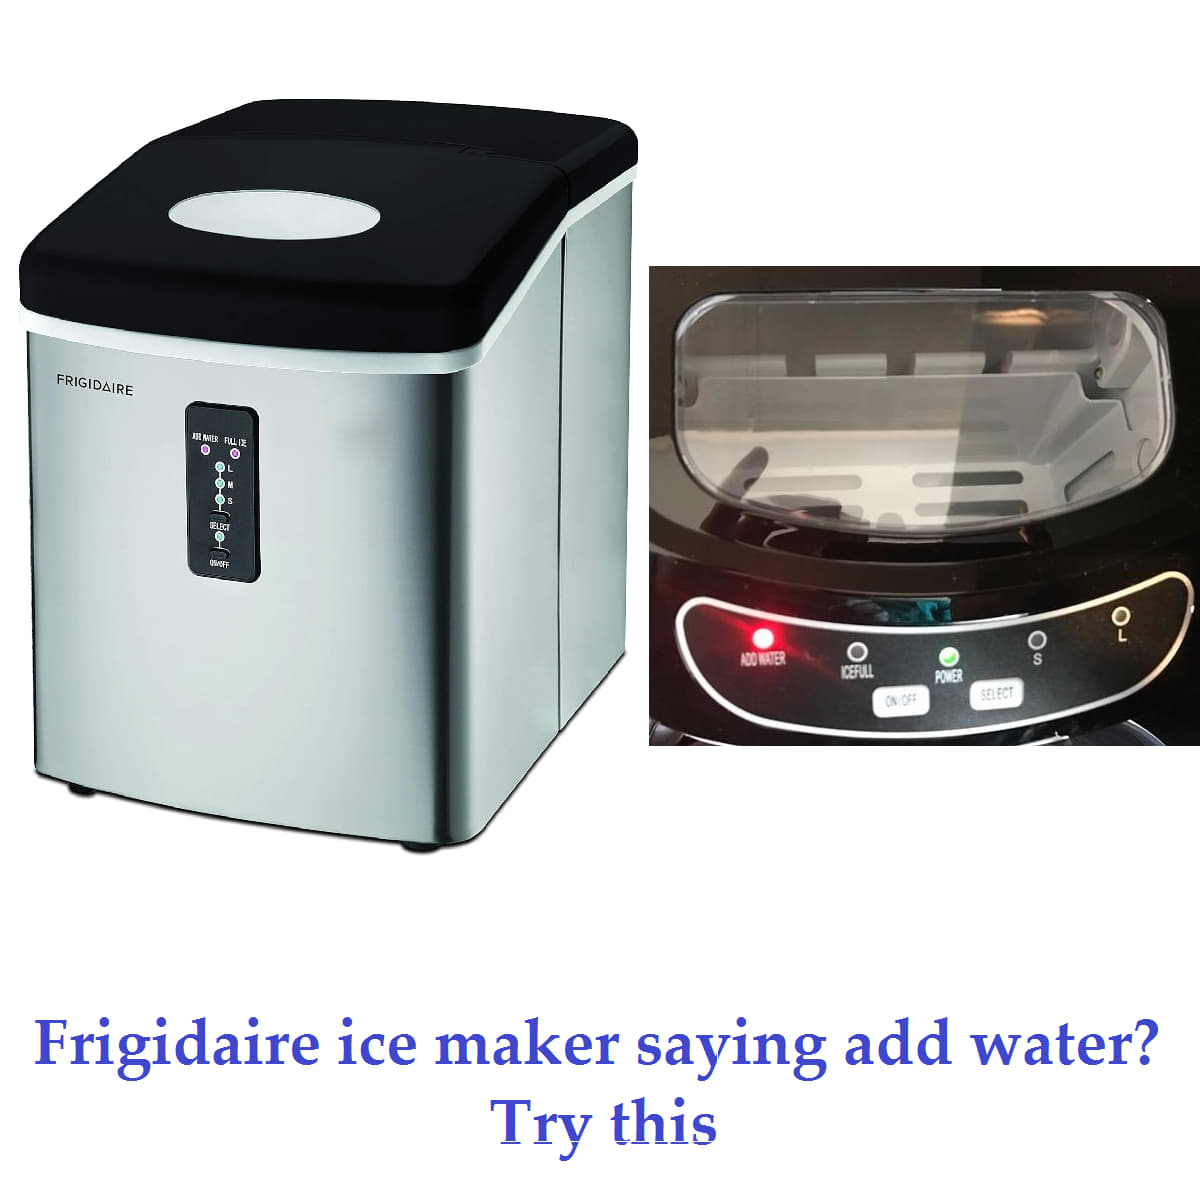 Frigidaire ice maker saying add water